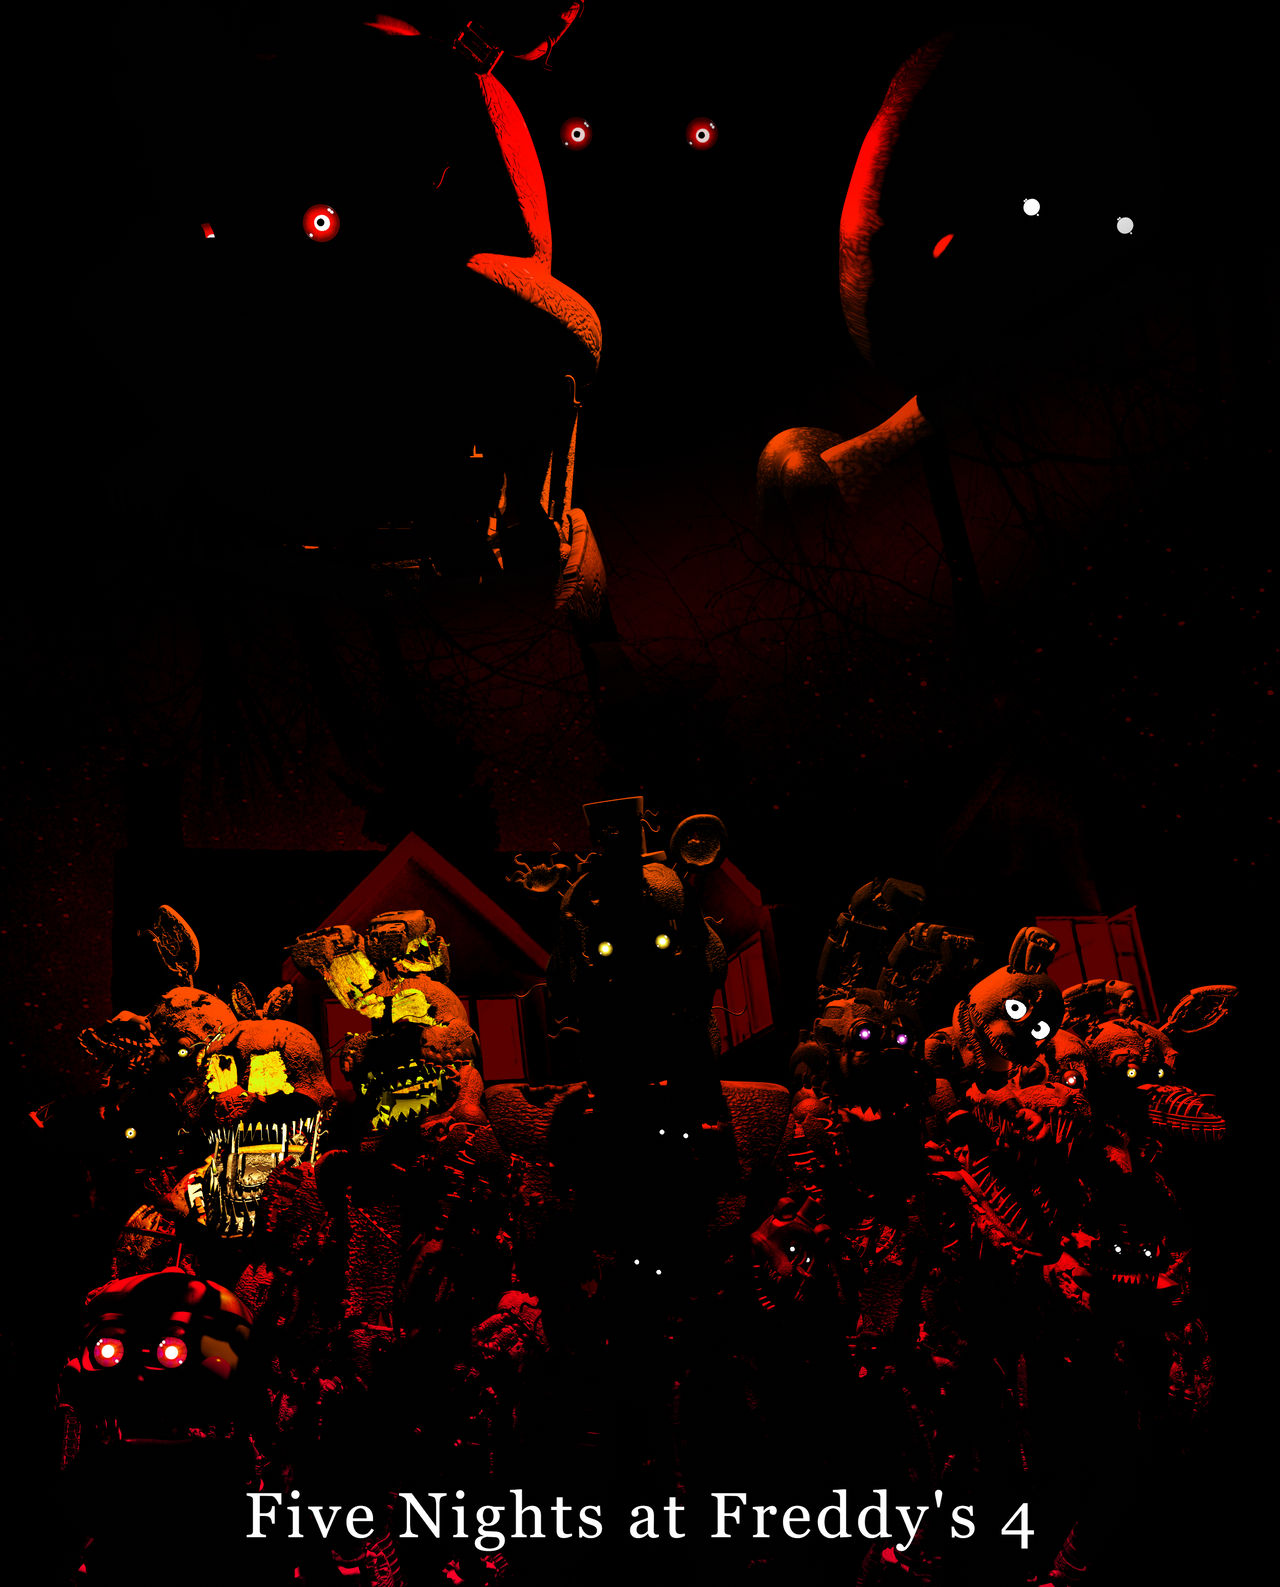 Fnaf movie) puppet poster (edit) by galaxystudios78 on DeviantArt